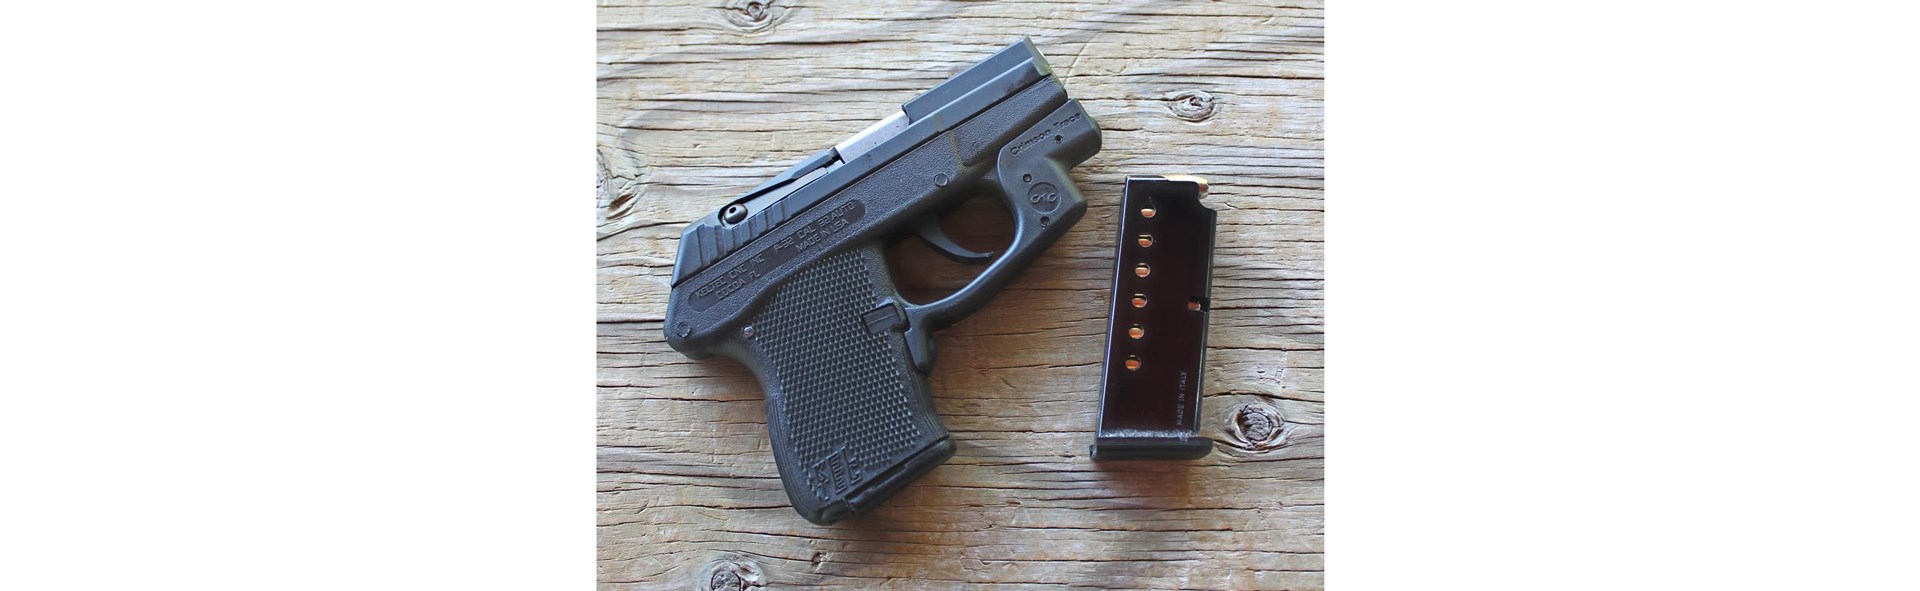 Keltec p32 pistol small handgun black with magazine on wood table